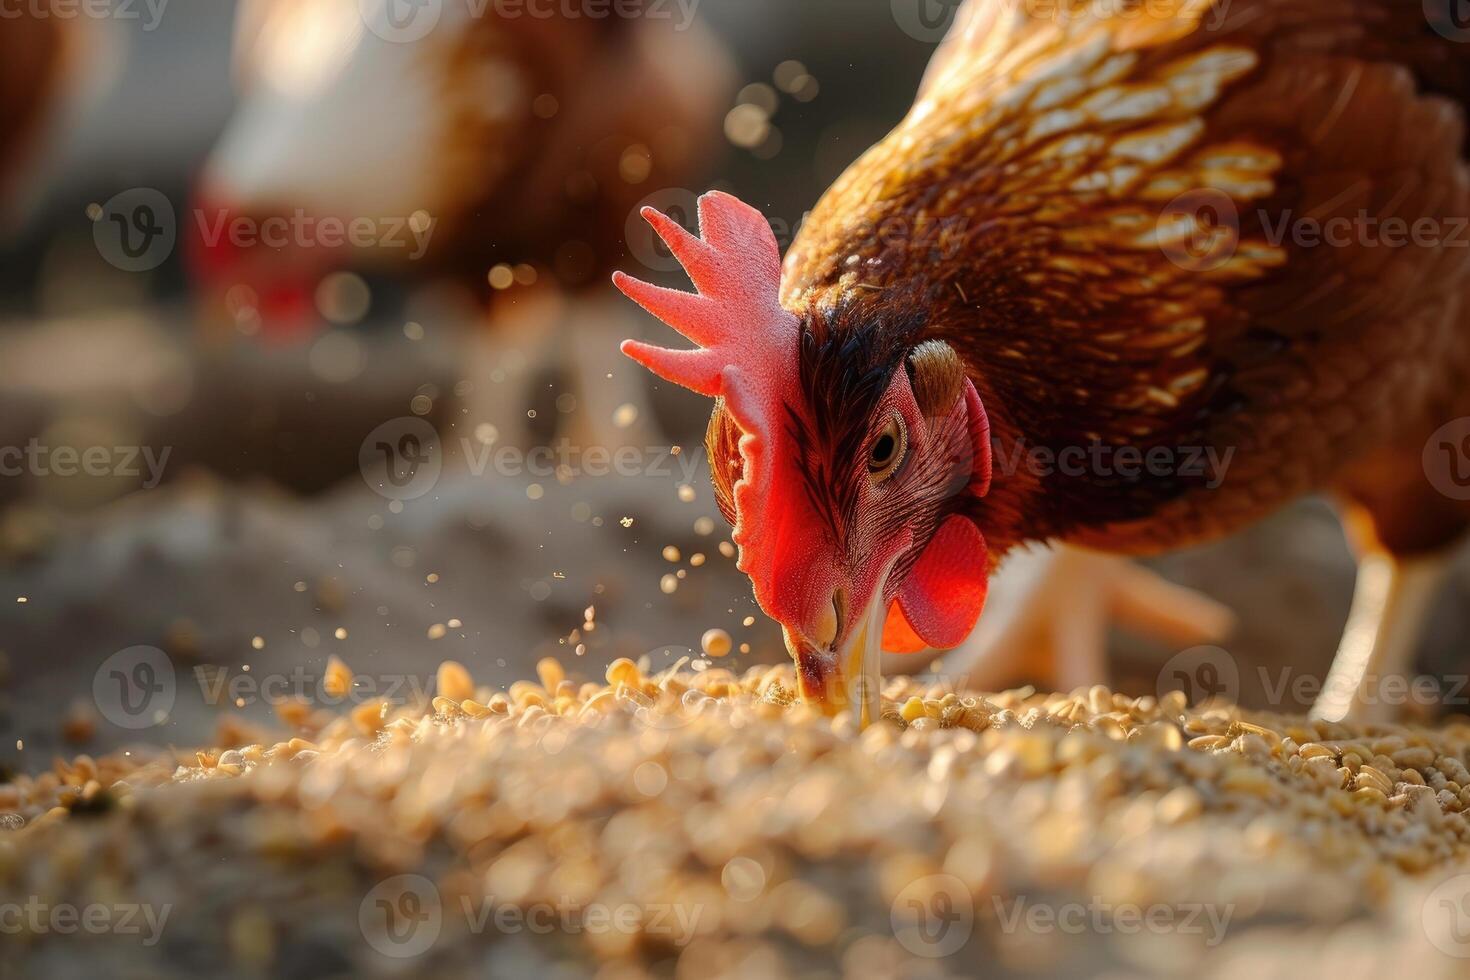 AI generated Chicken eats feed and grain at eco chicken farm, free range chicken farm. photo